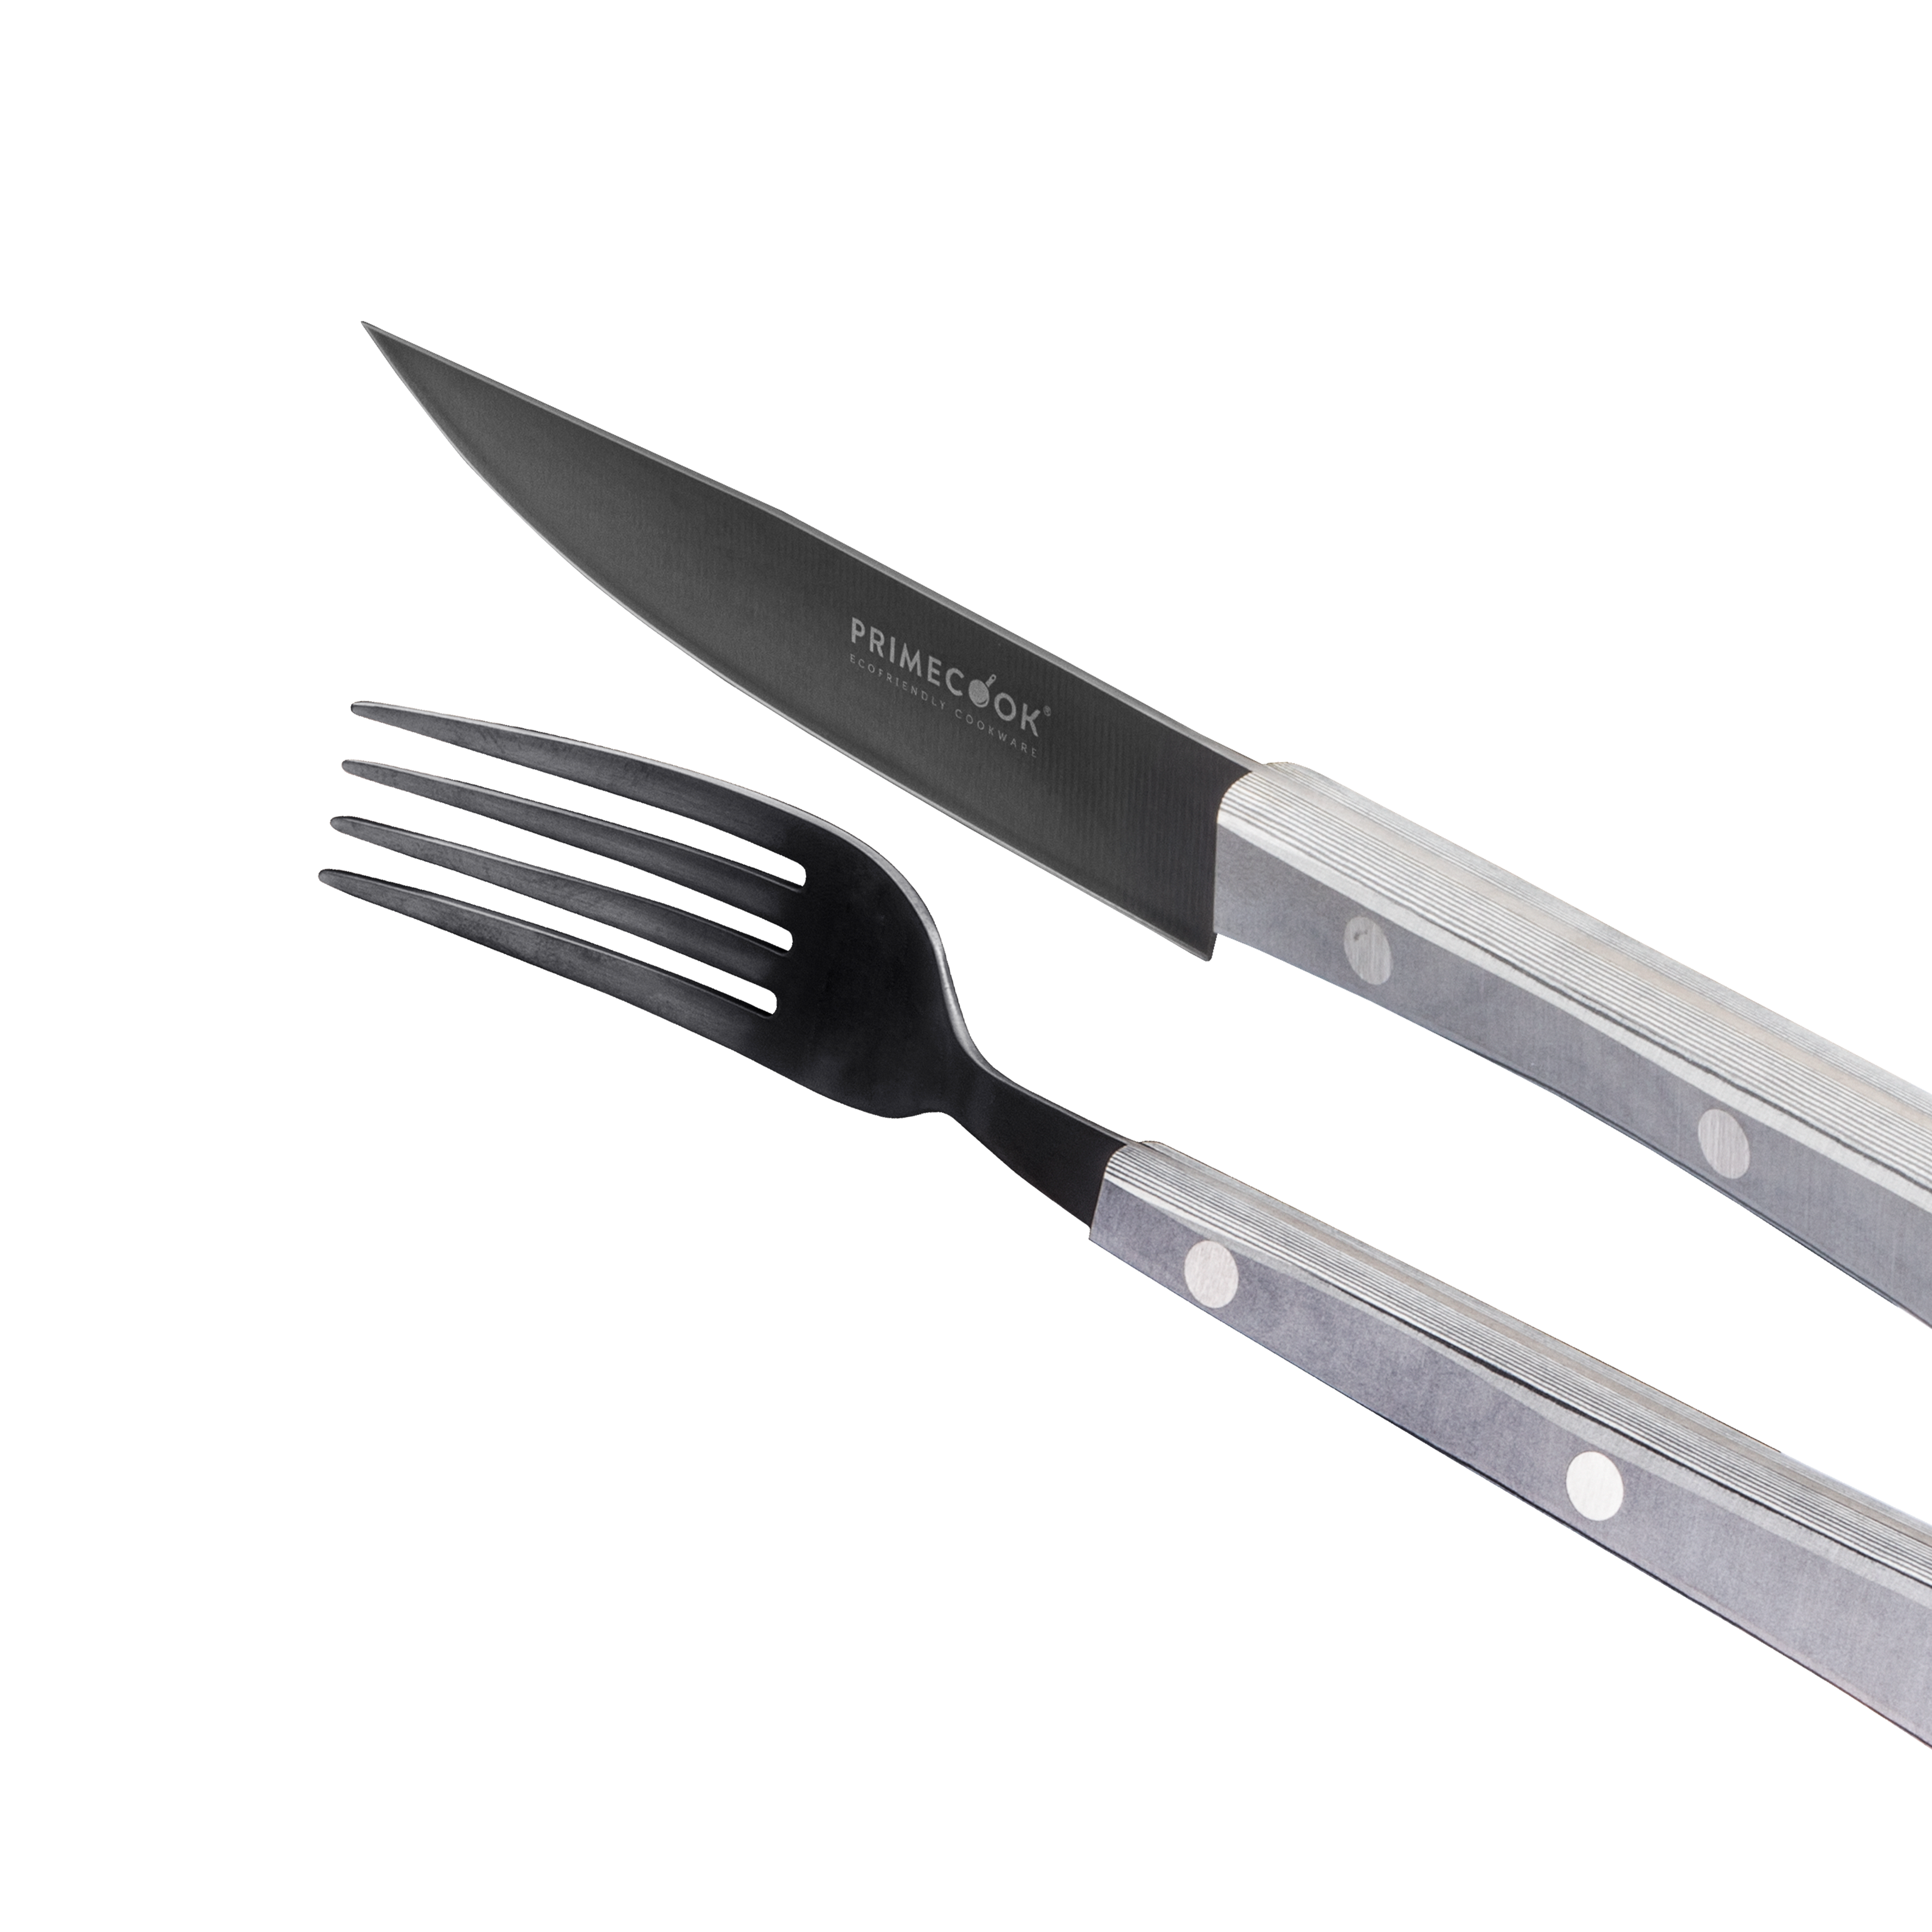 Ergonomic Kitchen Fork Knife